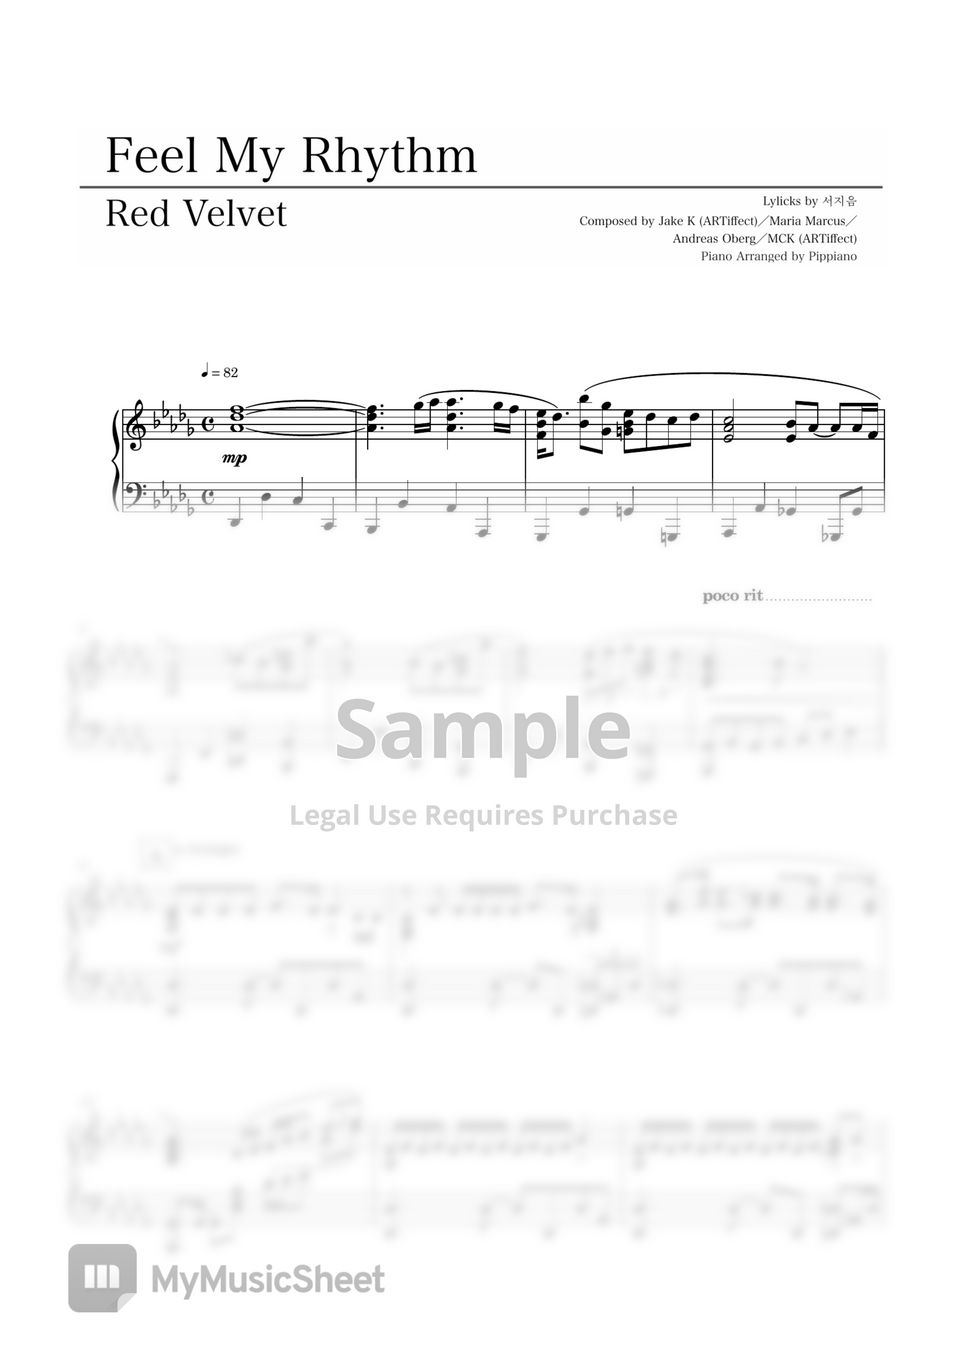 Red Velvet - Feel My Rhythm by Pippiano